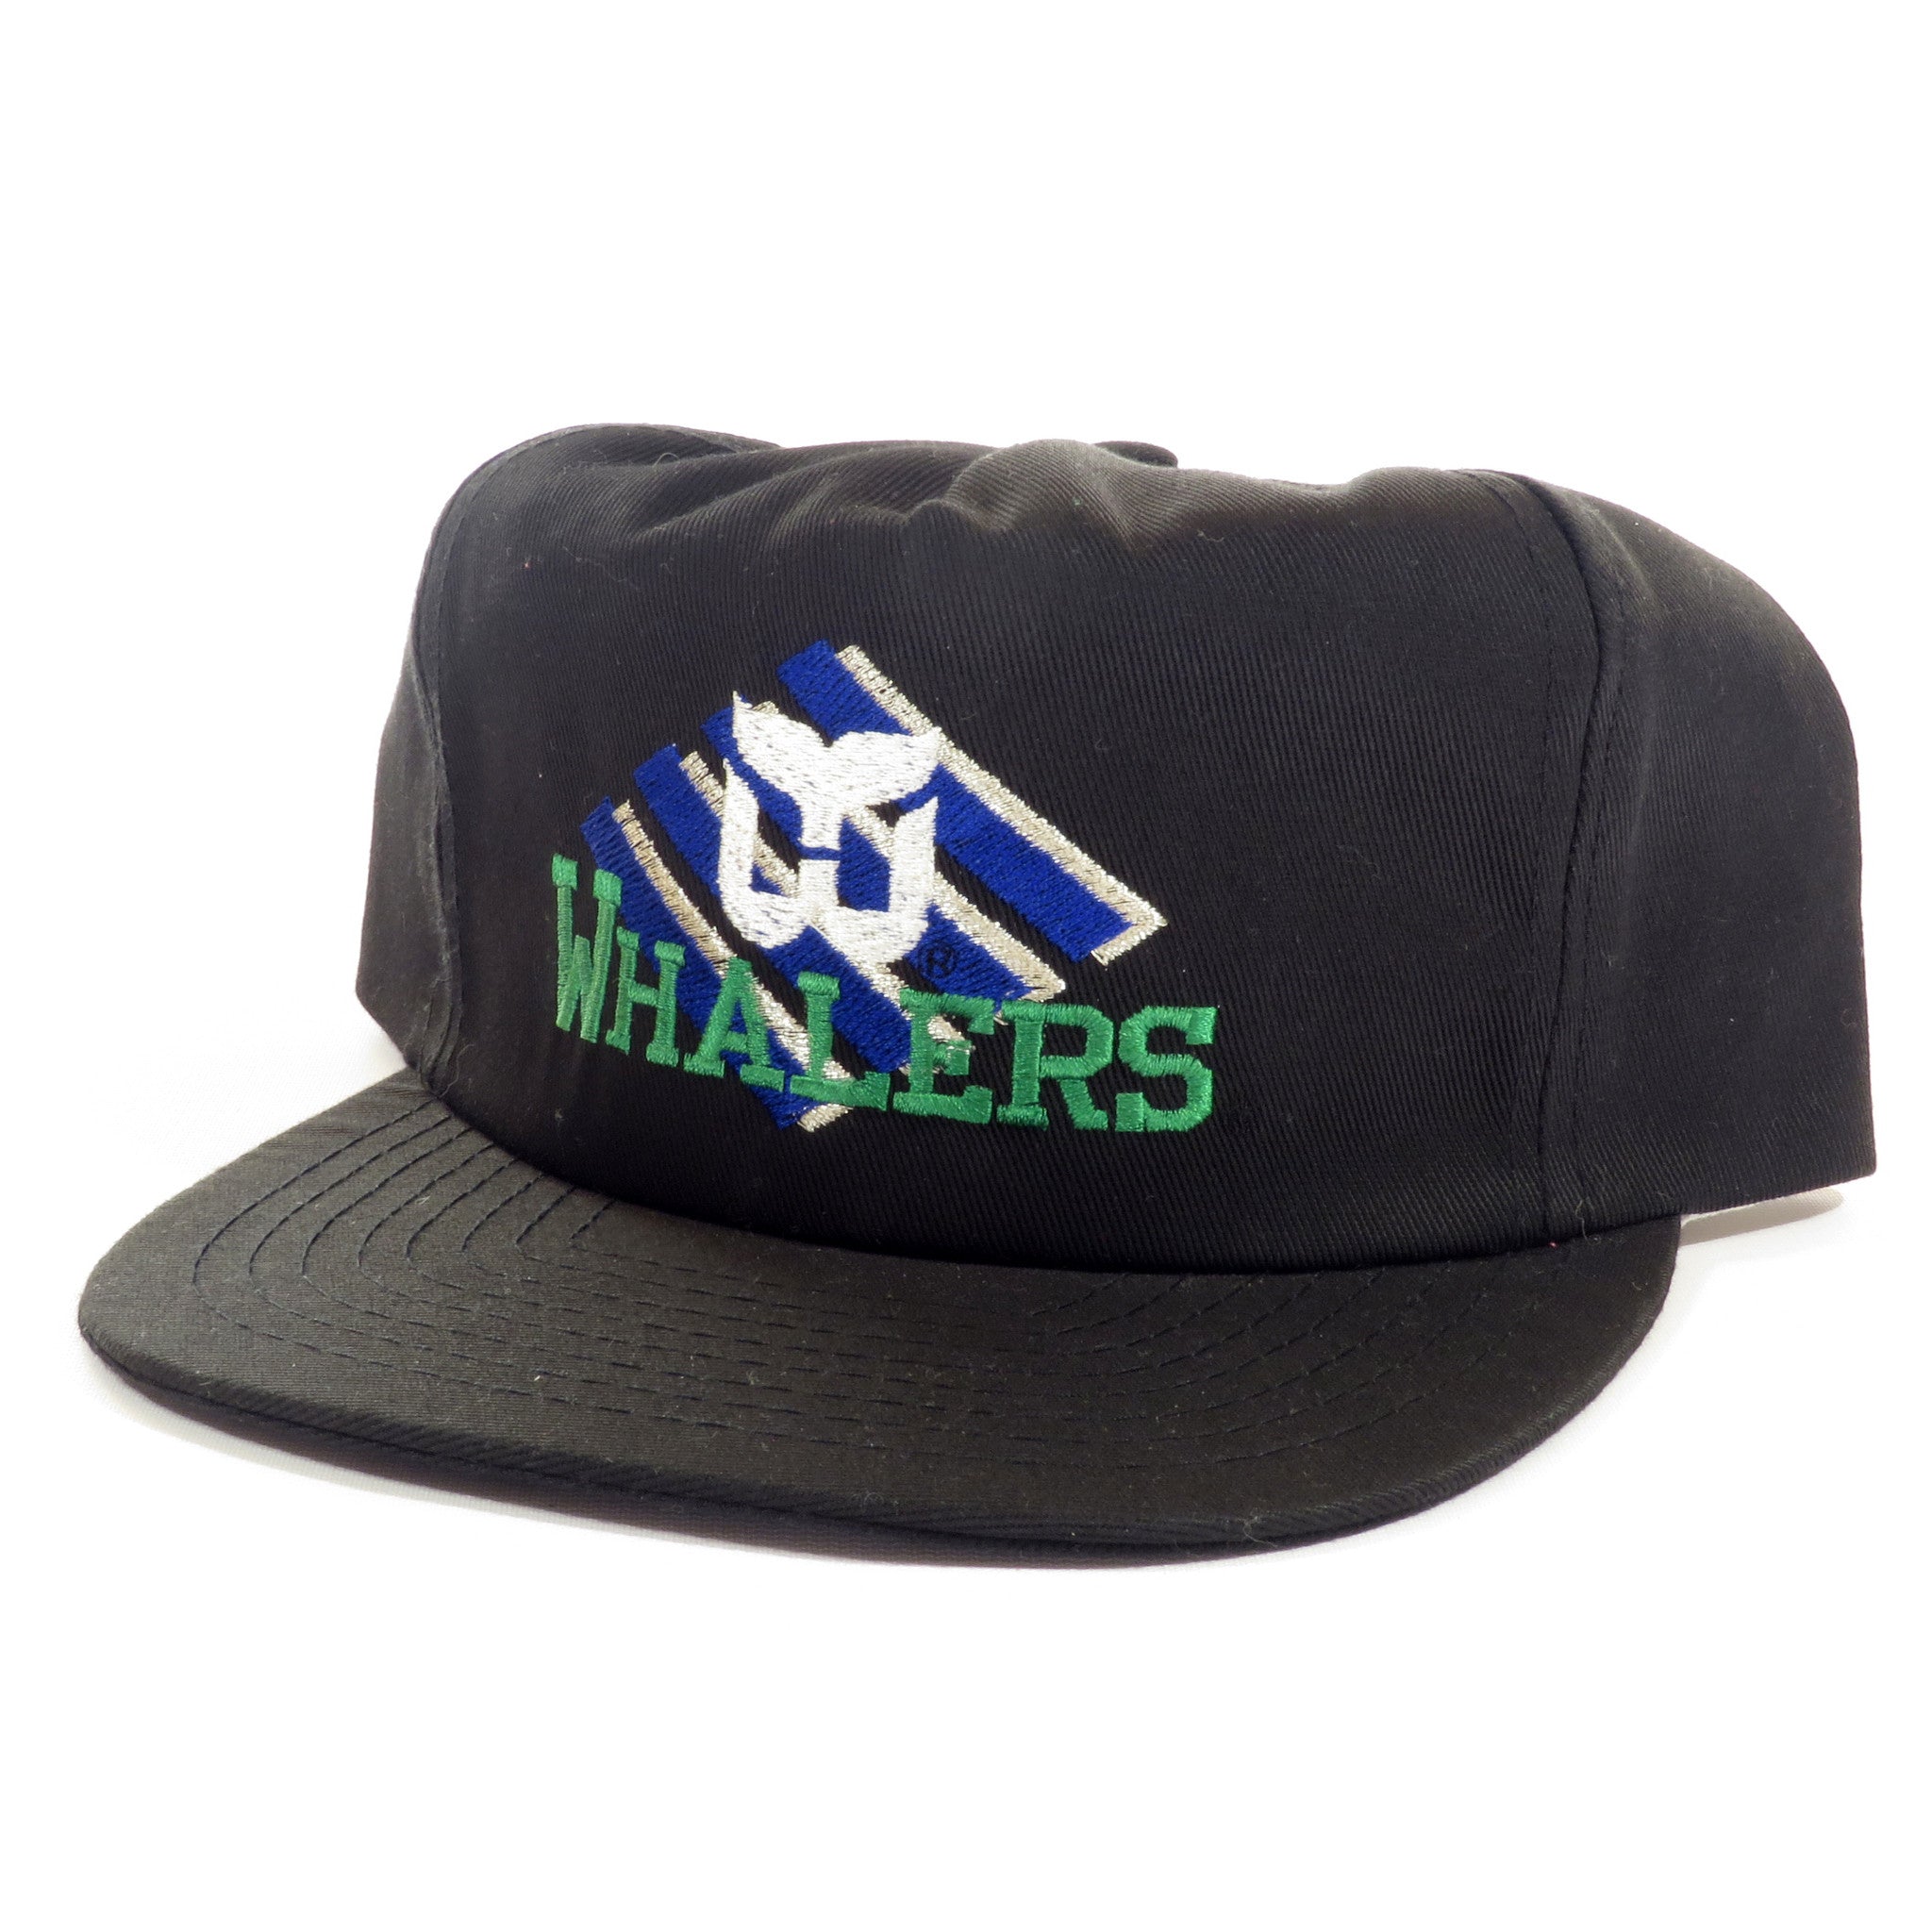 Hartford Whalers Snapback Hat